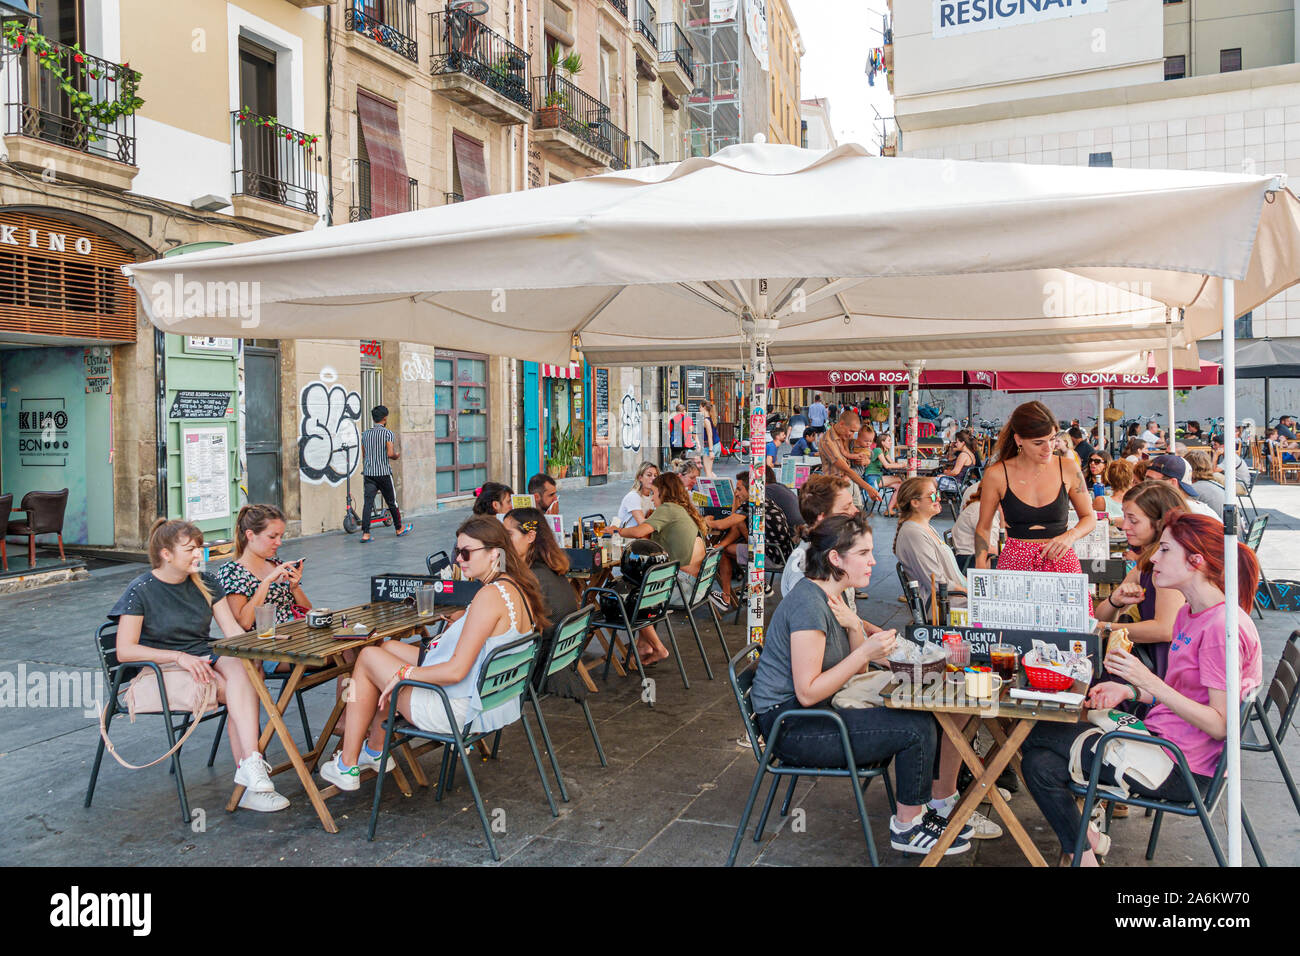 Barcelona Spain,Catalonia Ciutat Vella,El Raval,Kino, restaurant,outside table,umbrella,busy,al fresco,dining,man,woman,young adult,students,waitress, Stock Photo